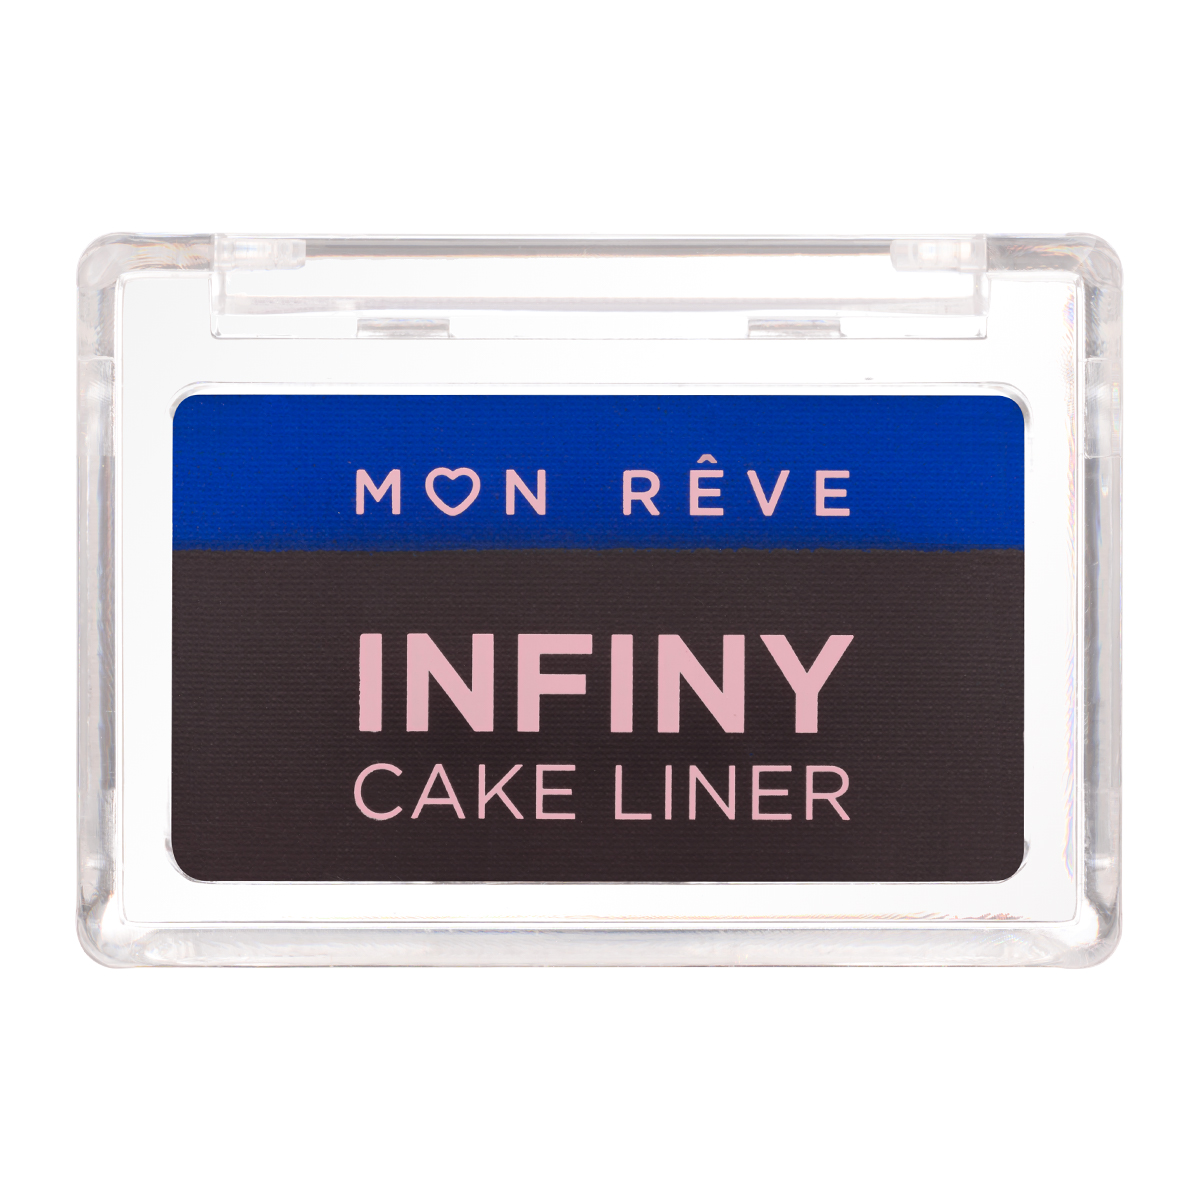 INFINY CAKE LINER